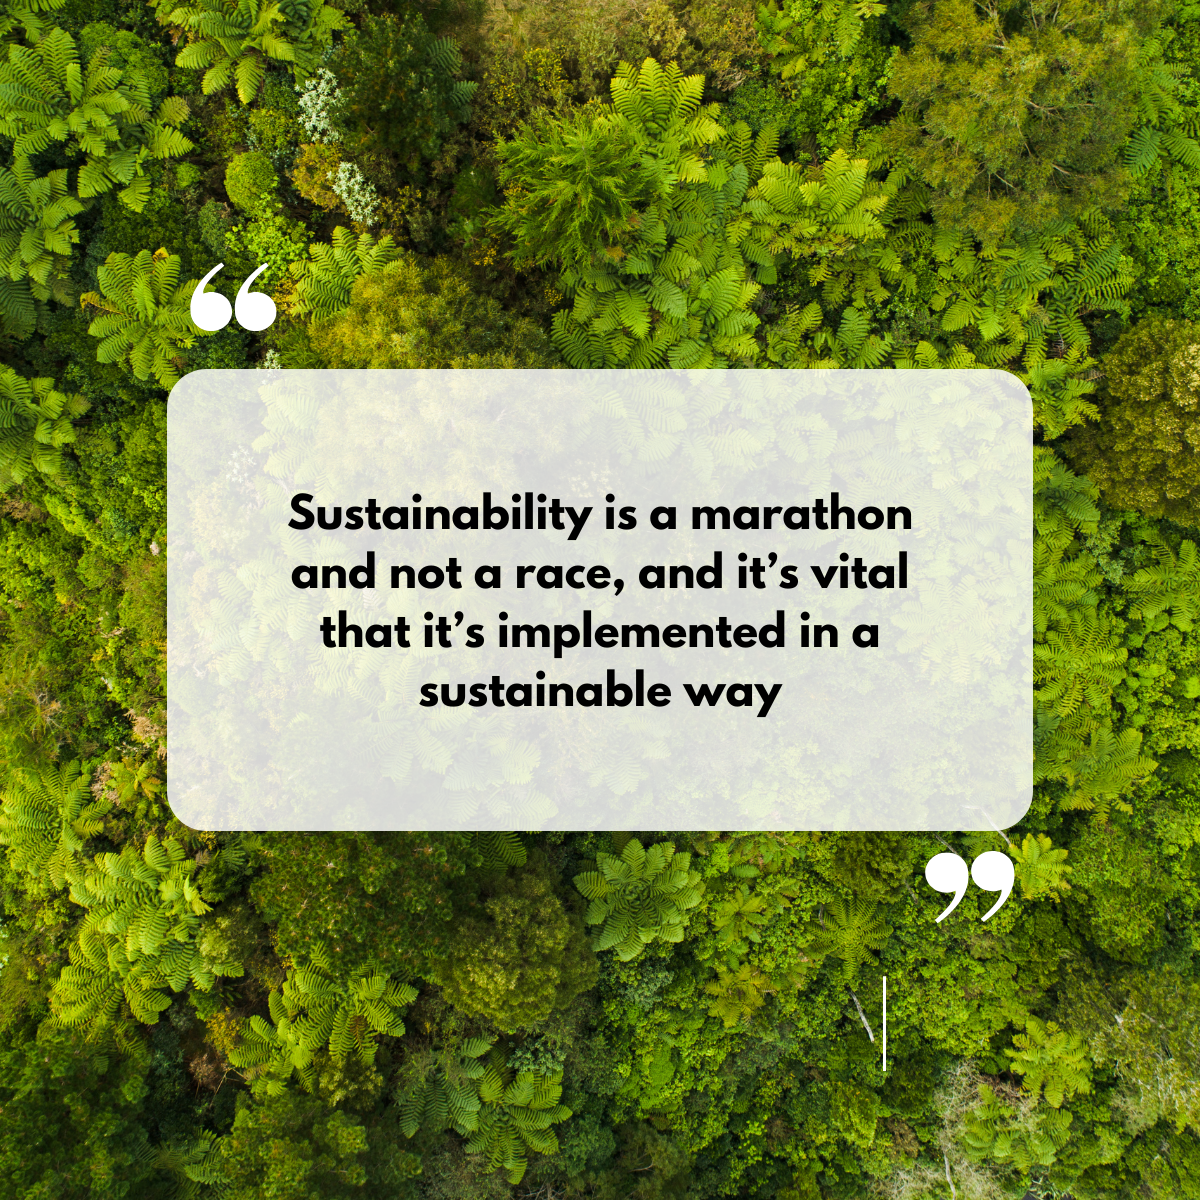 Sustainability needs to be sustainable